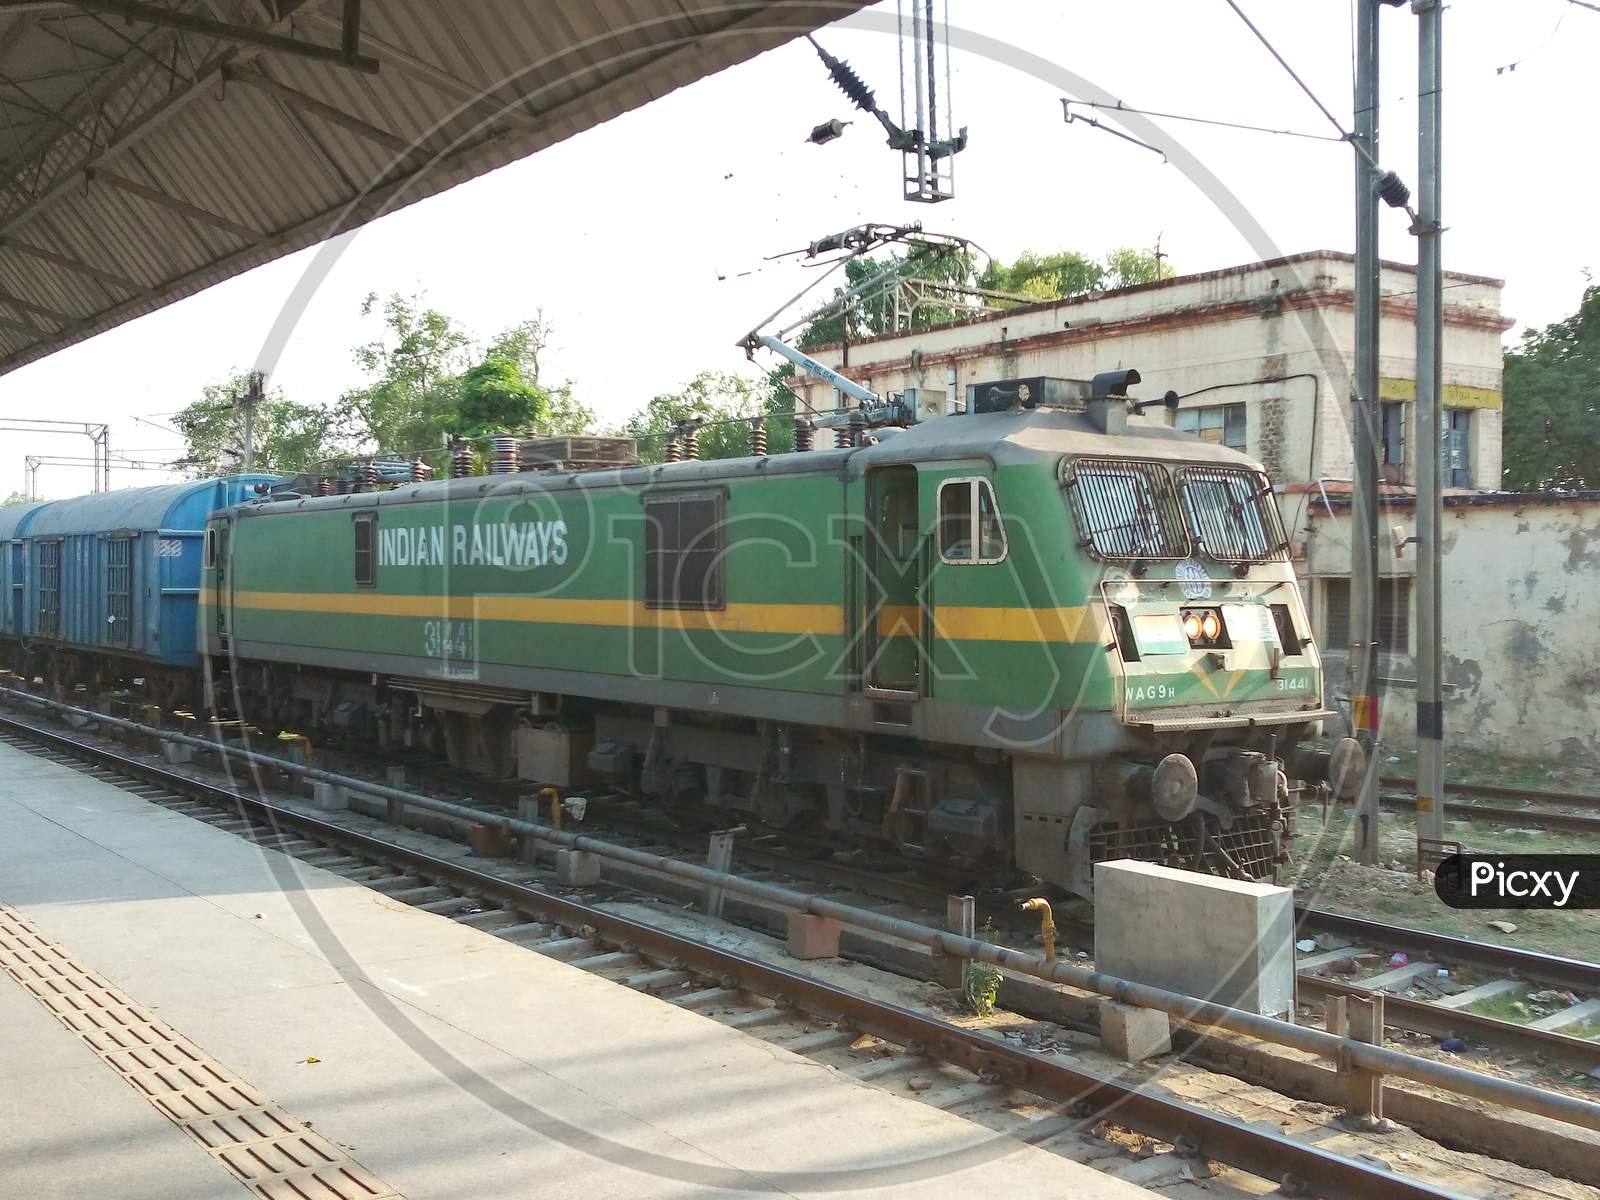 Indian railways electric locomotive